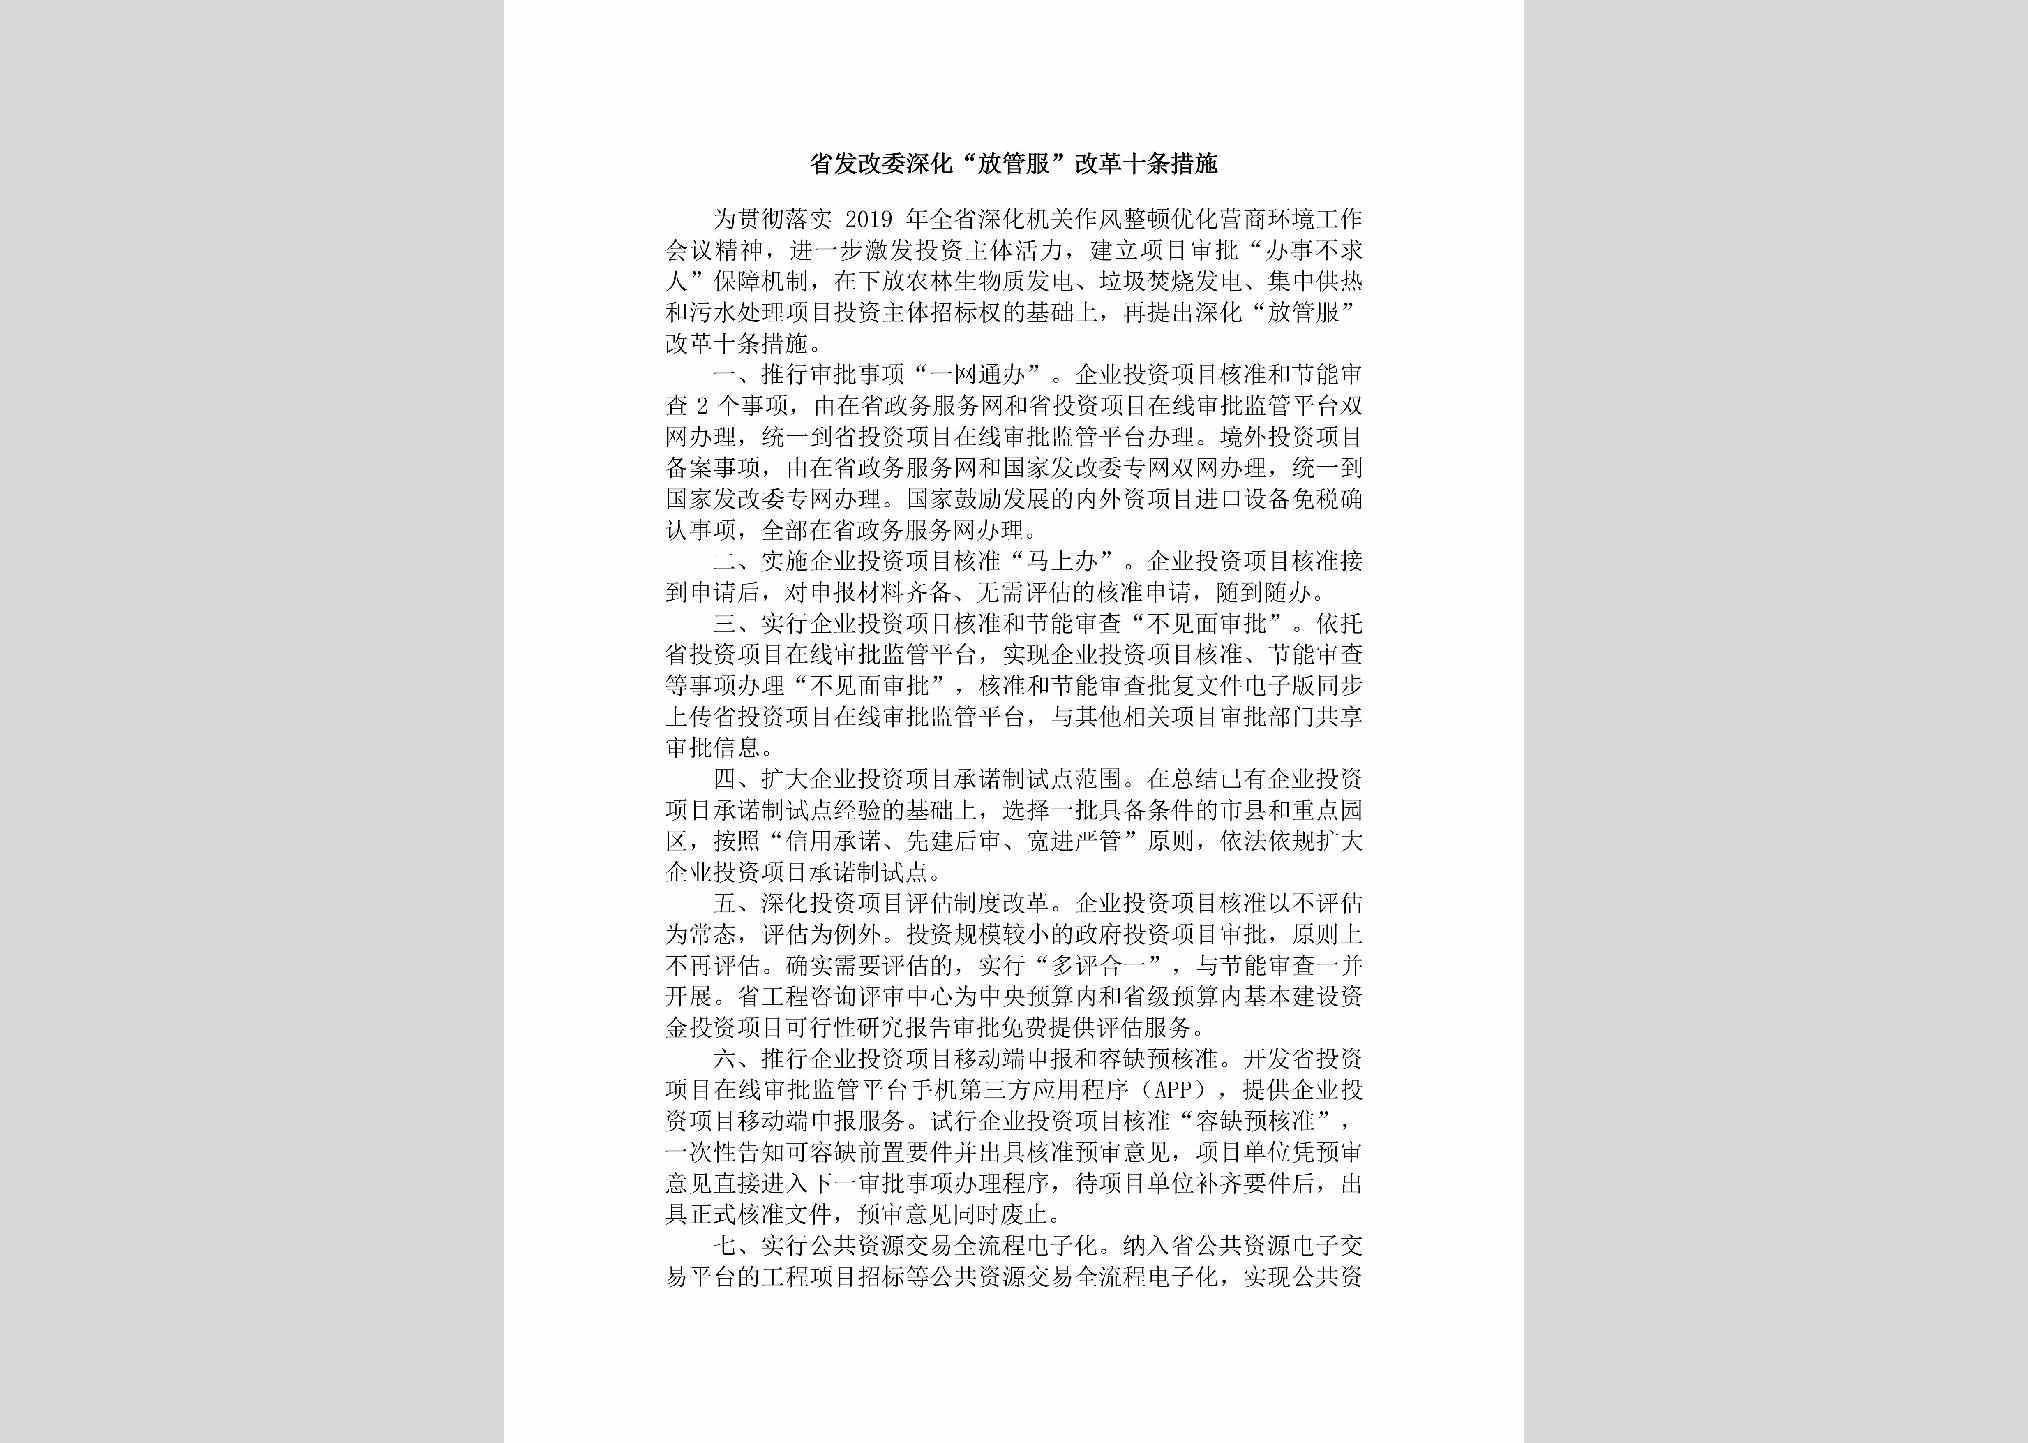 HLJ-SFGWYHFG-2019：省发改委深化“放管服”改革十条措施